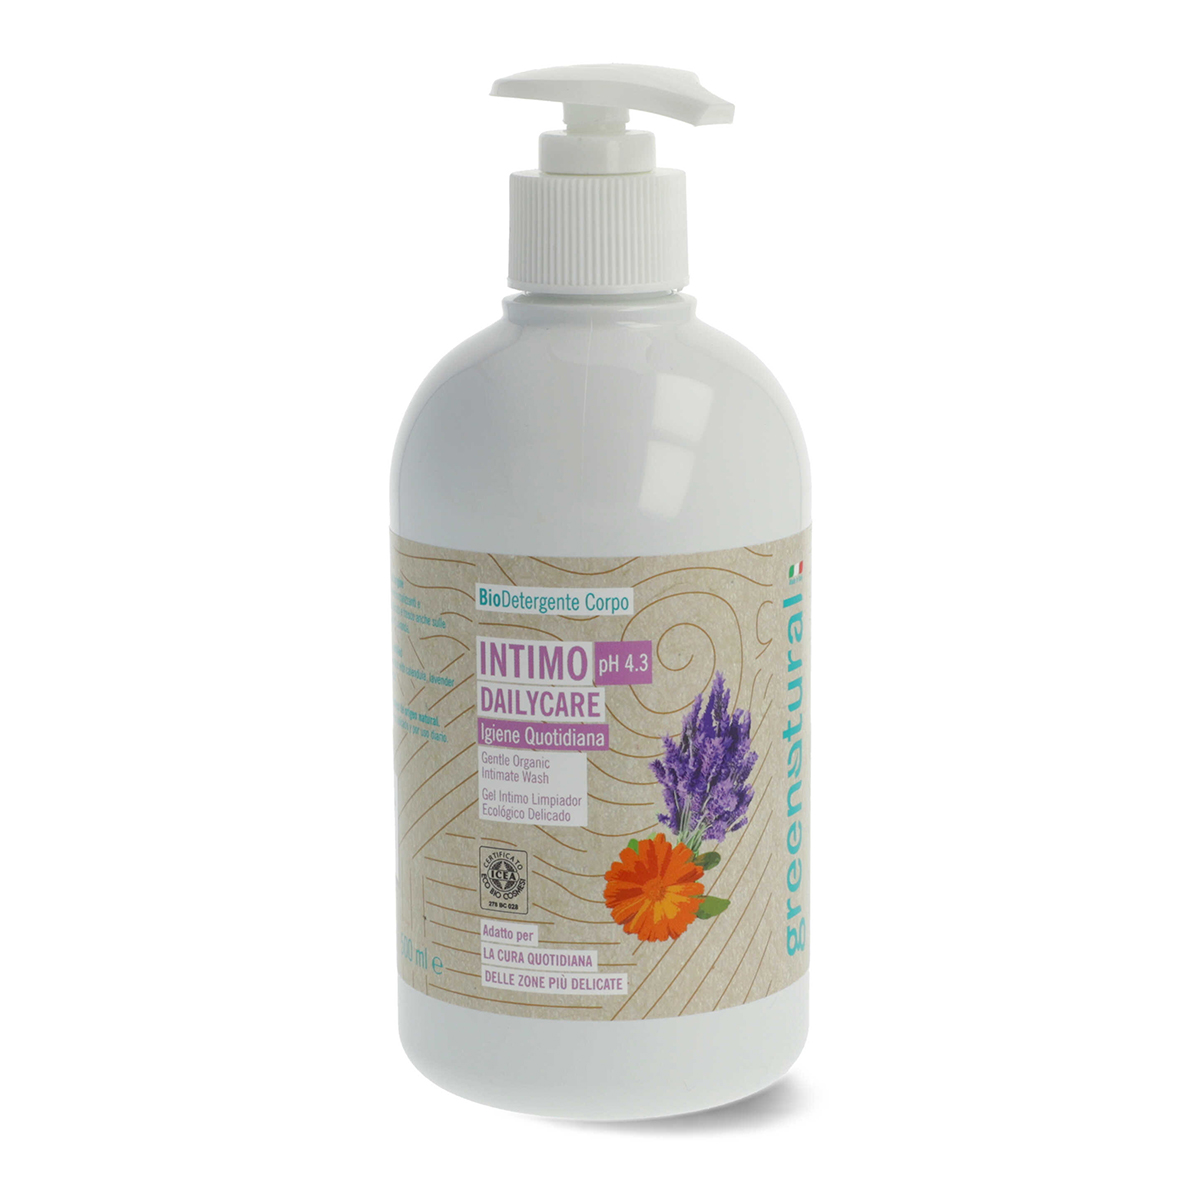 Detergente Intimo DAILYCARE pH 4.3  - 500ml, , large